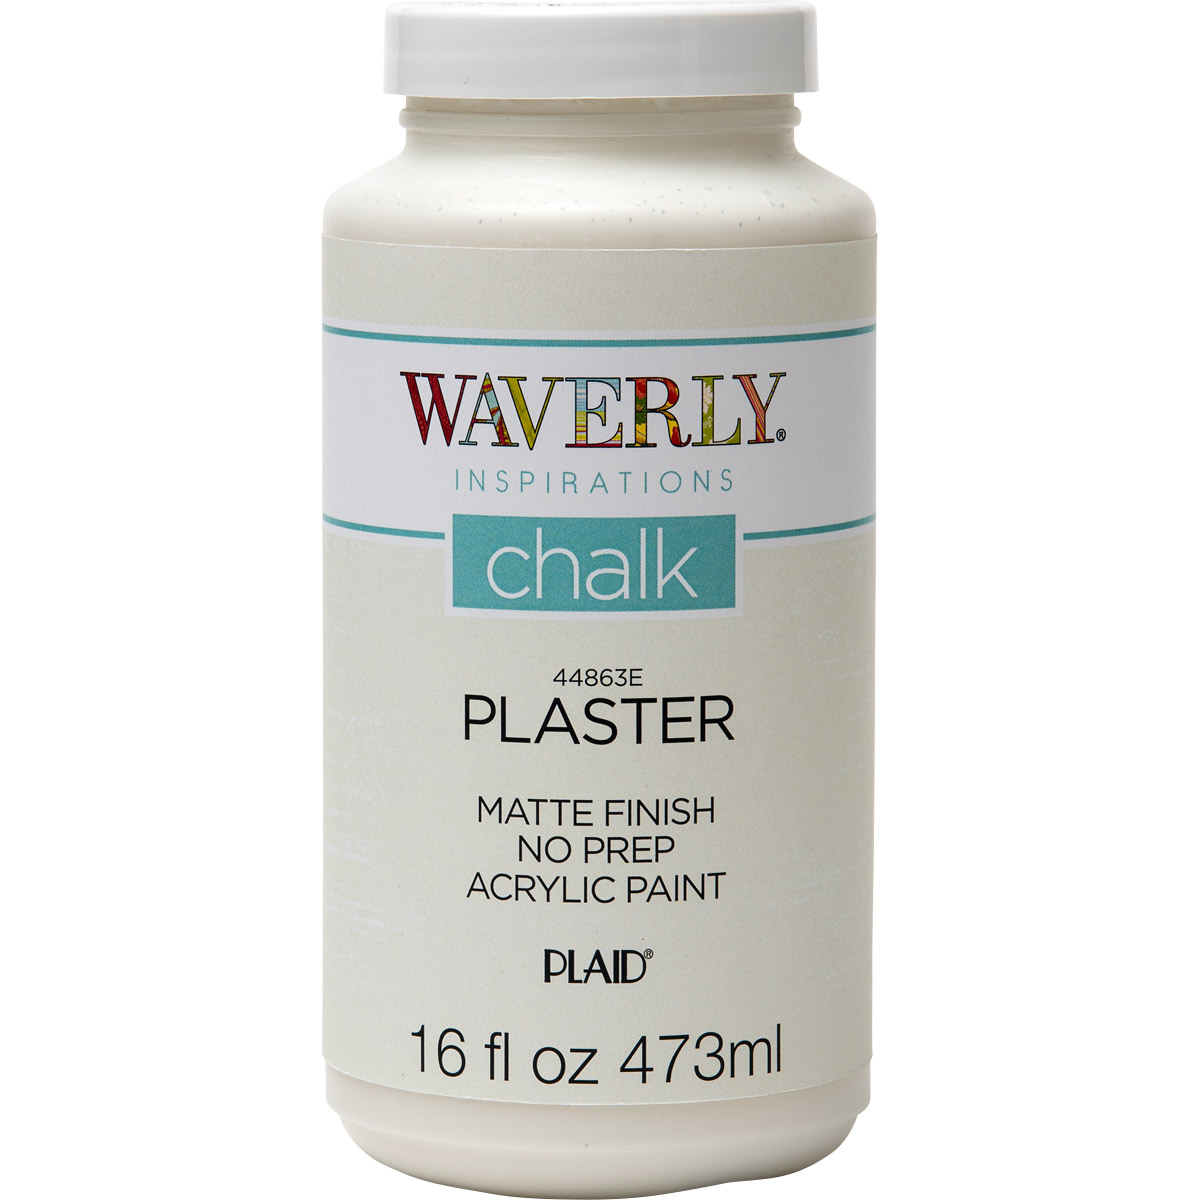 Waverly ® Inspirations Chalk Finish Acrylic Paint - Plaster, 16 oz. - 44863E